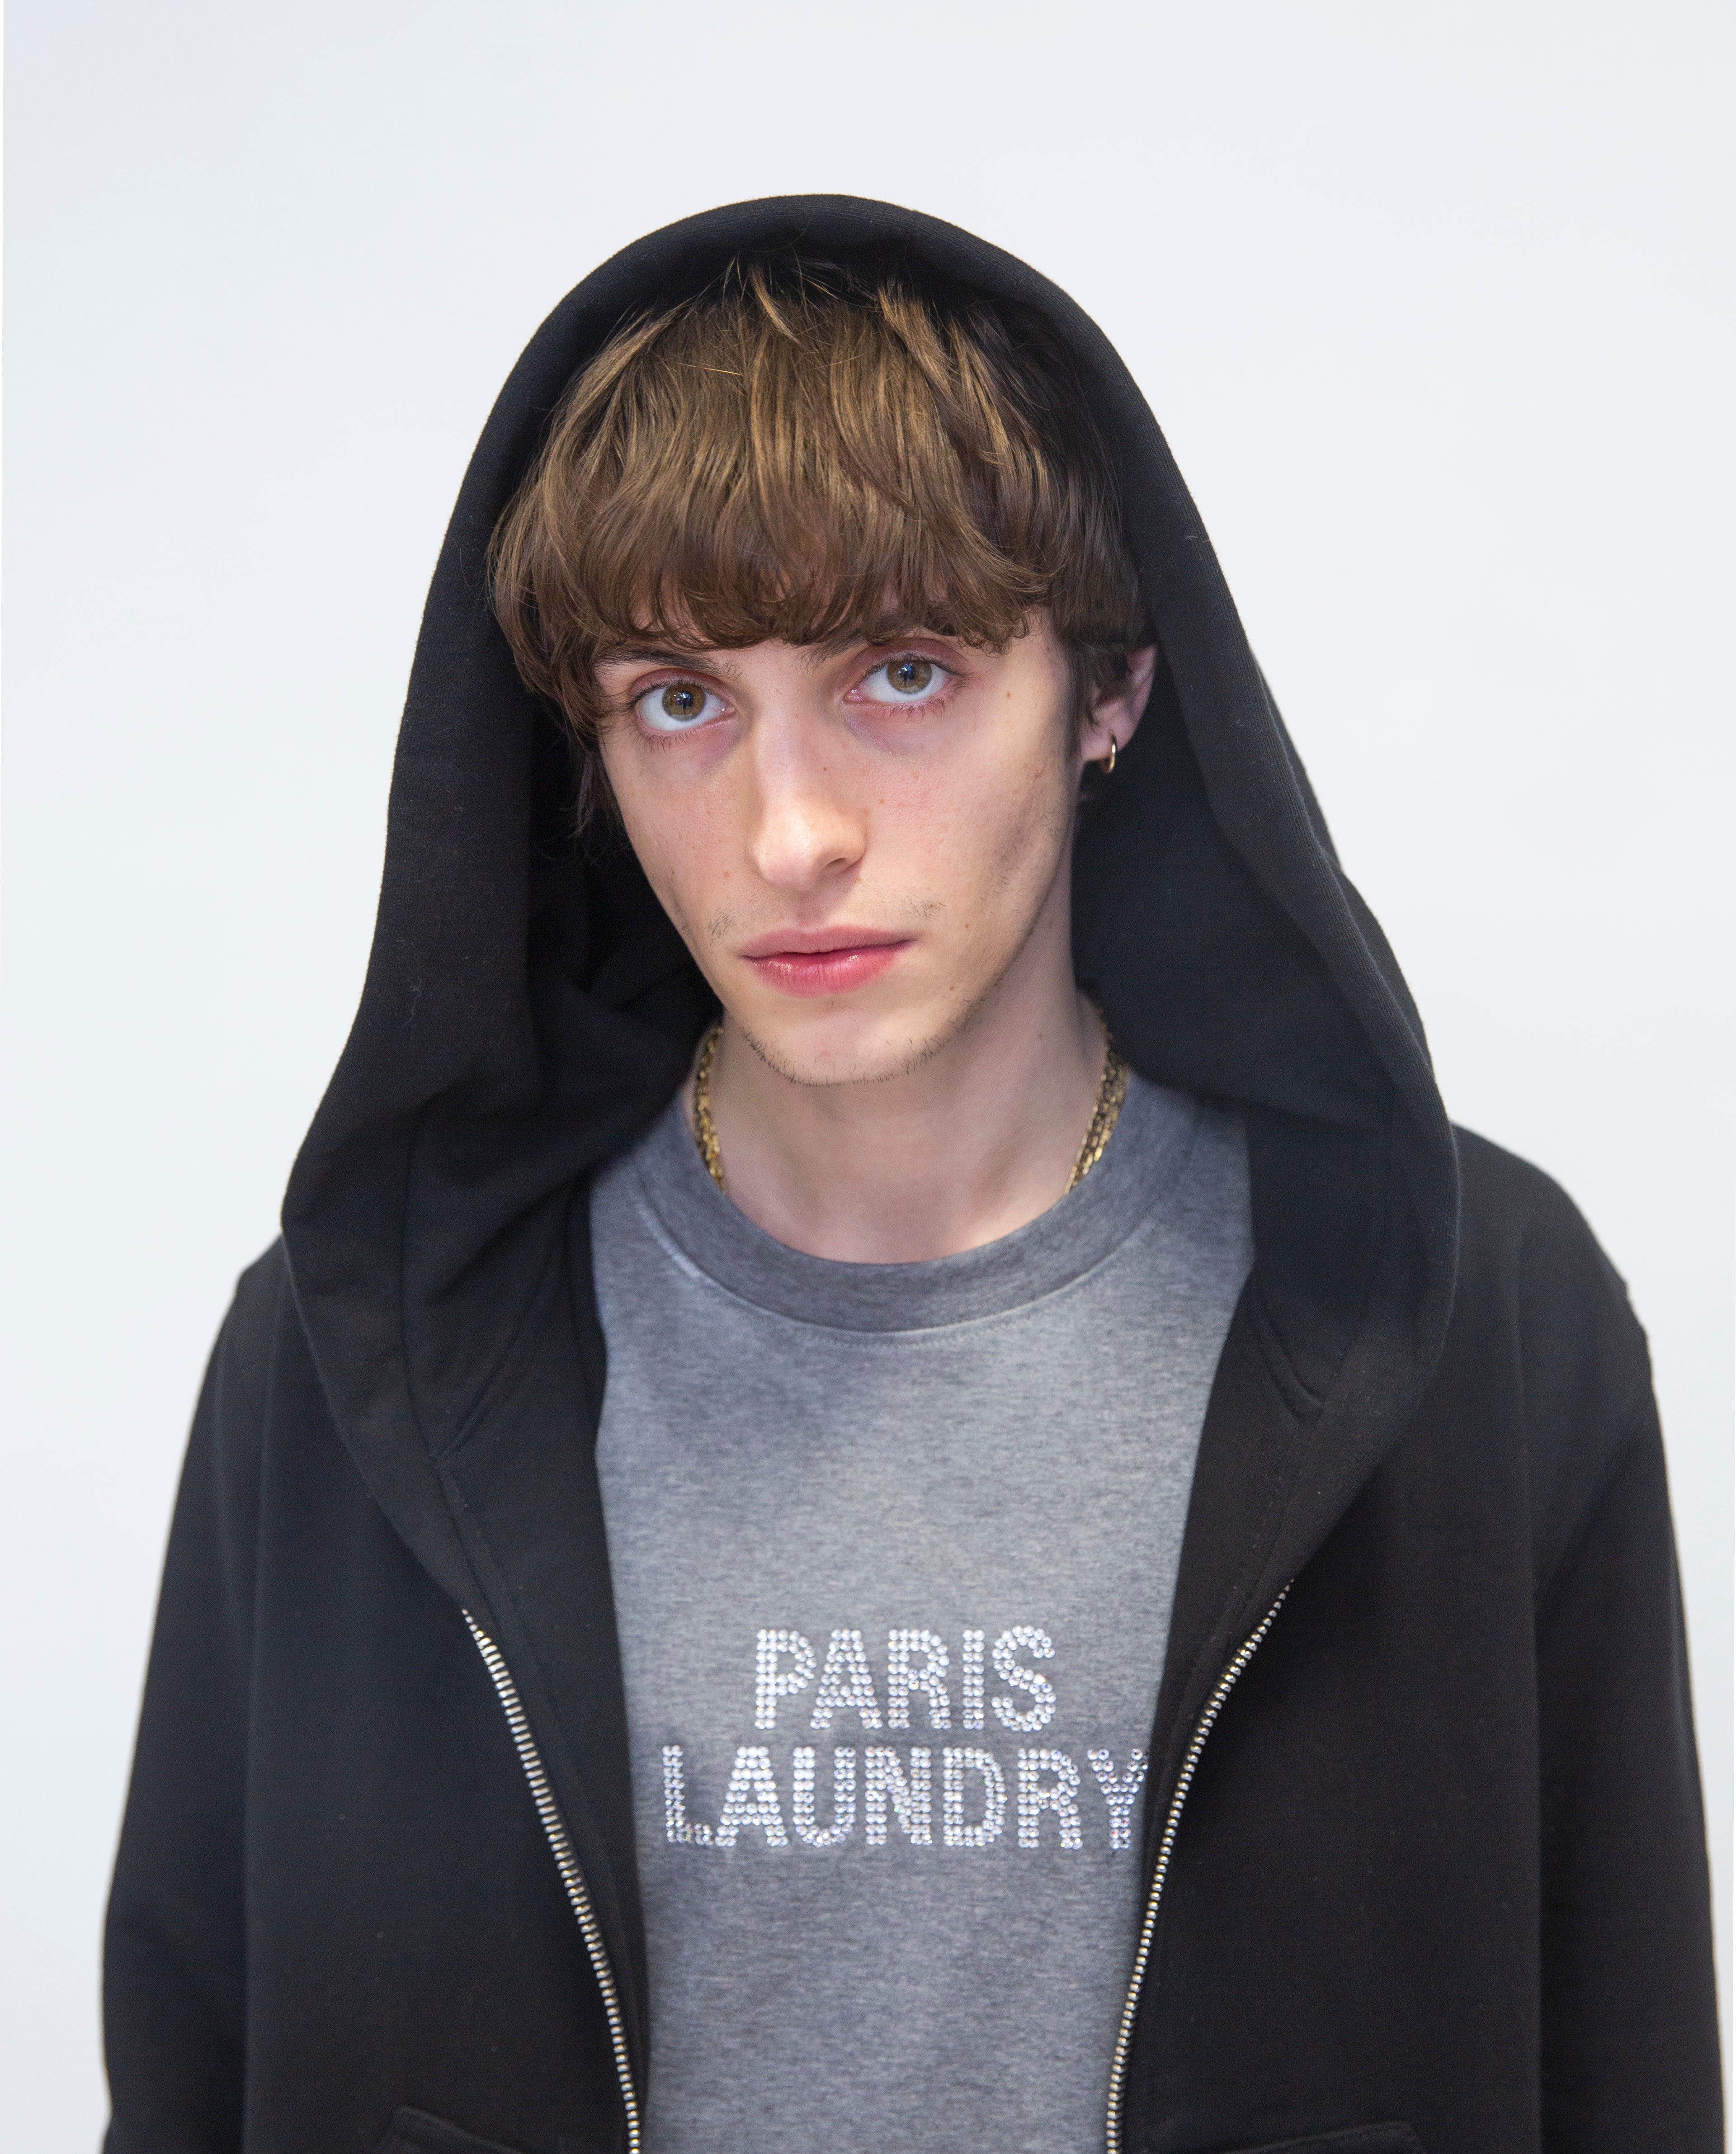 paris laundry lookbook image